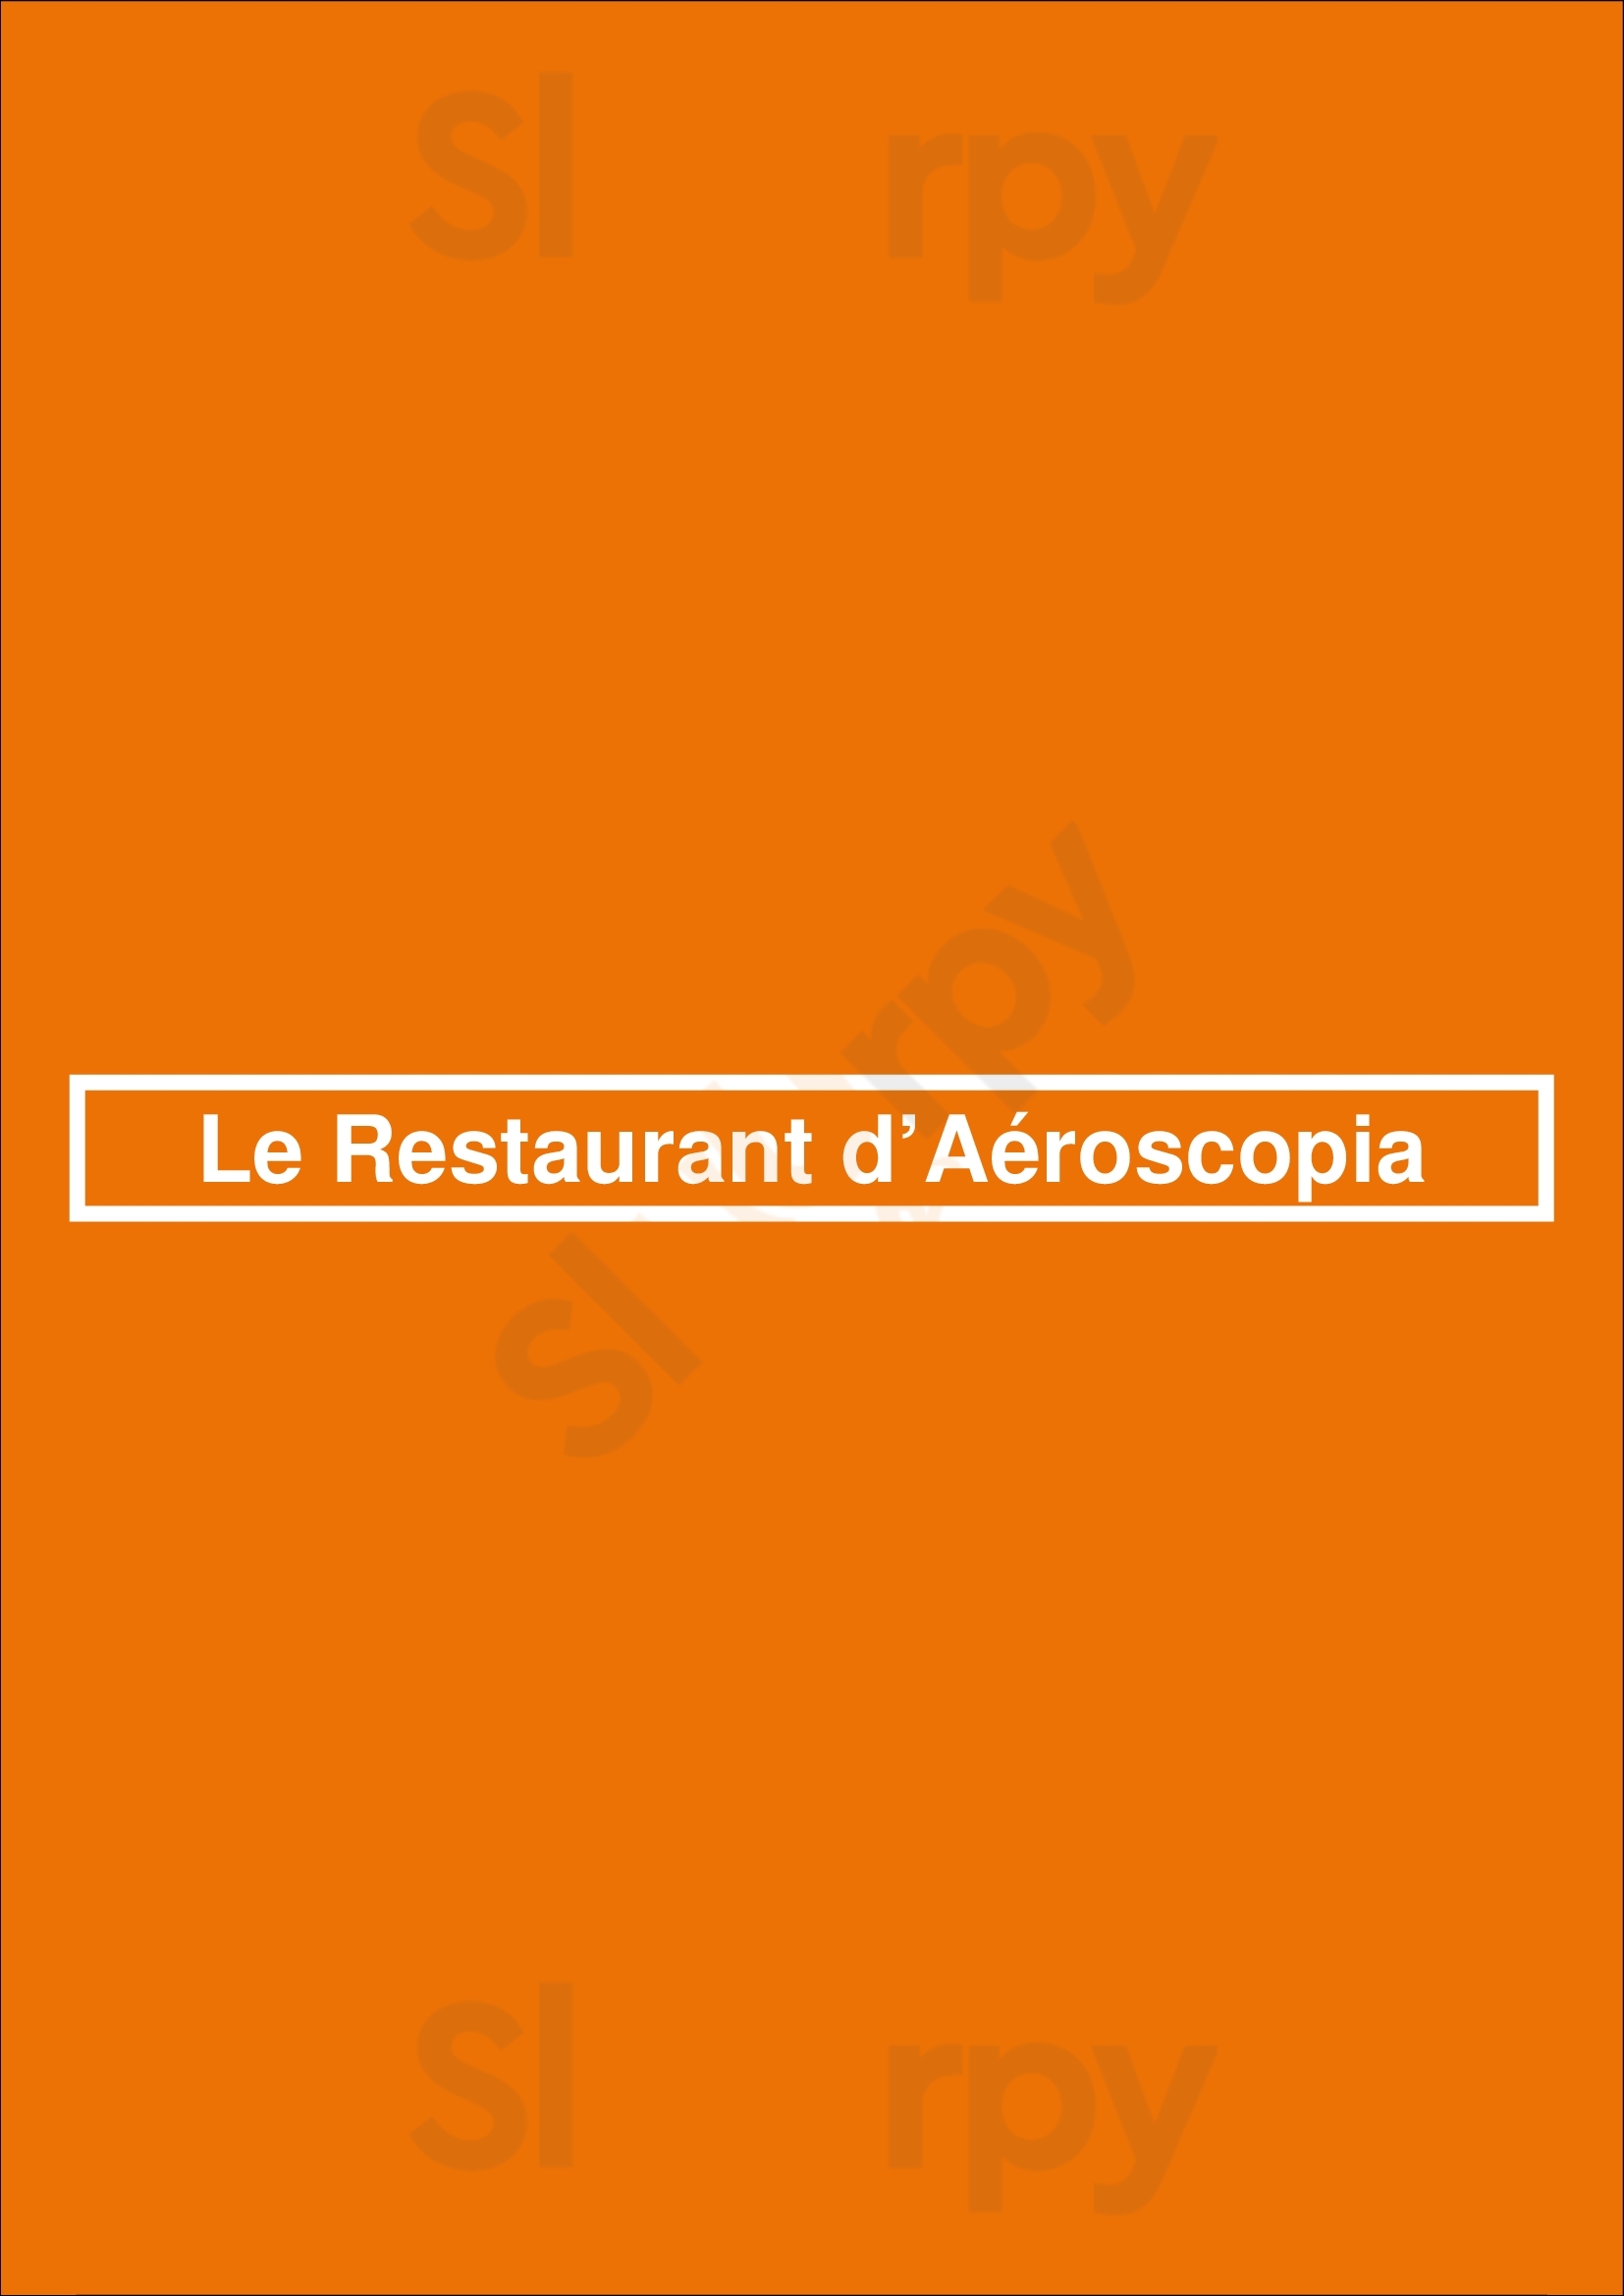 Le Restaurant D’aéroscopia Blagnac Menu - 1